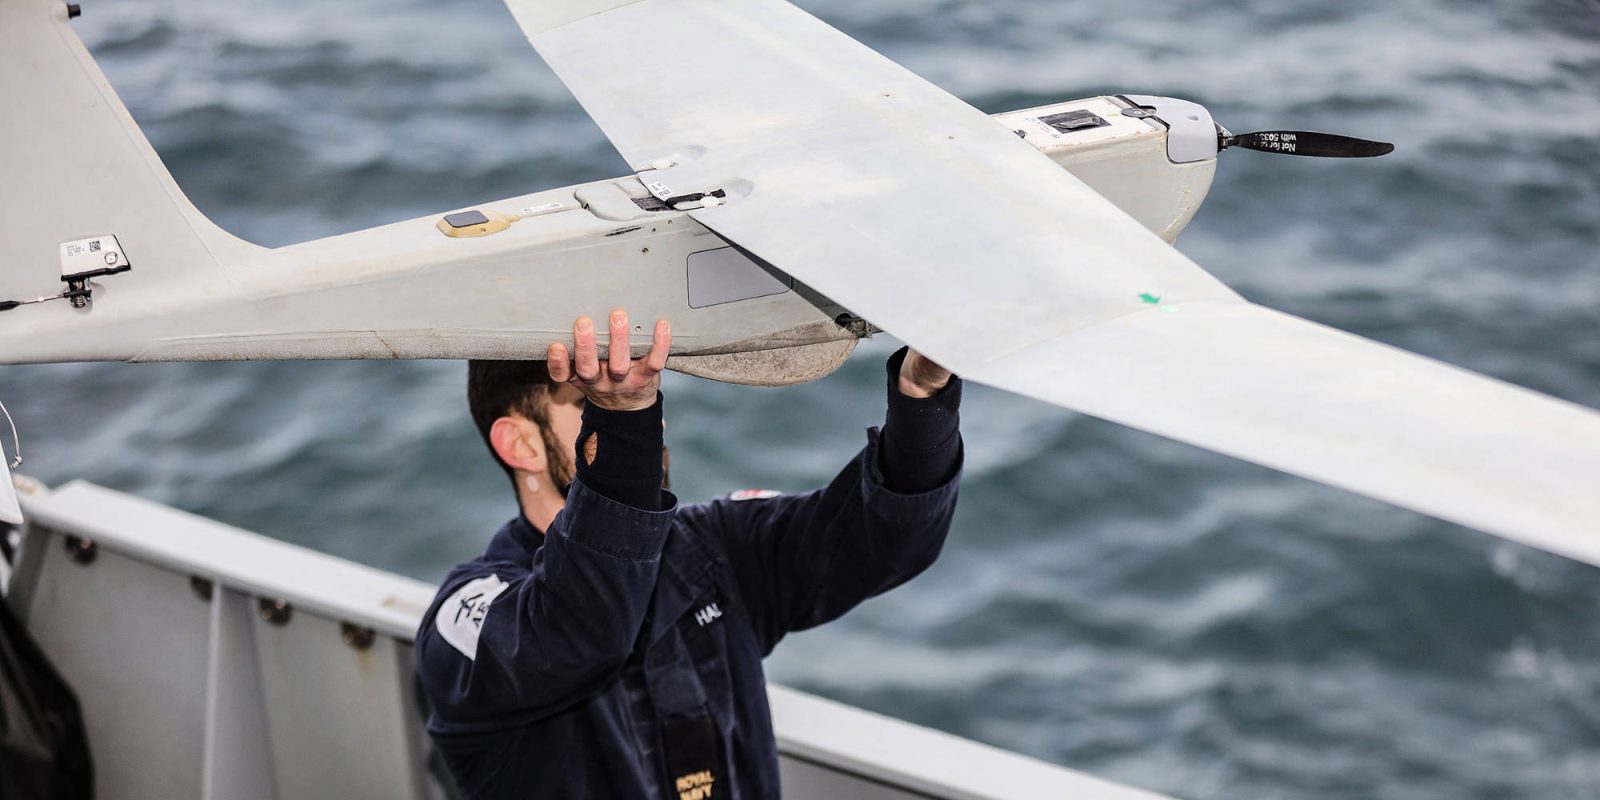 Royal Navy drones improve capabilities